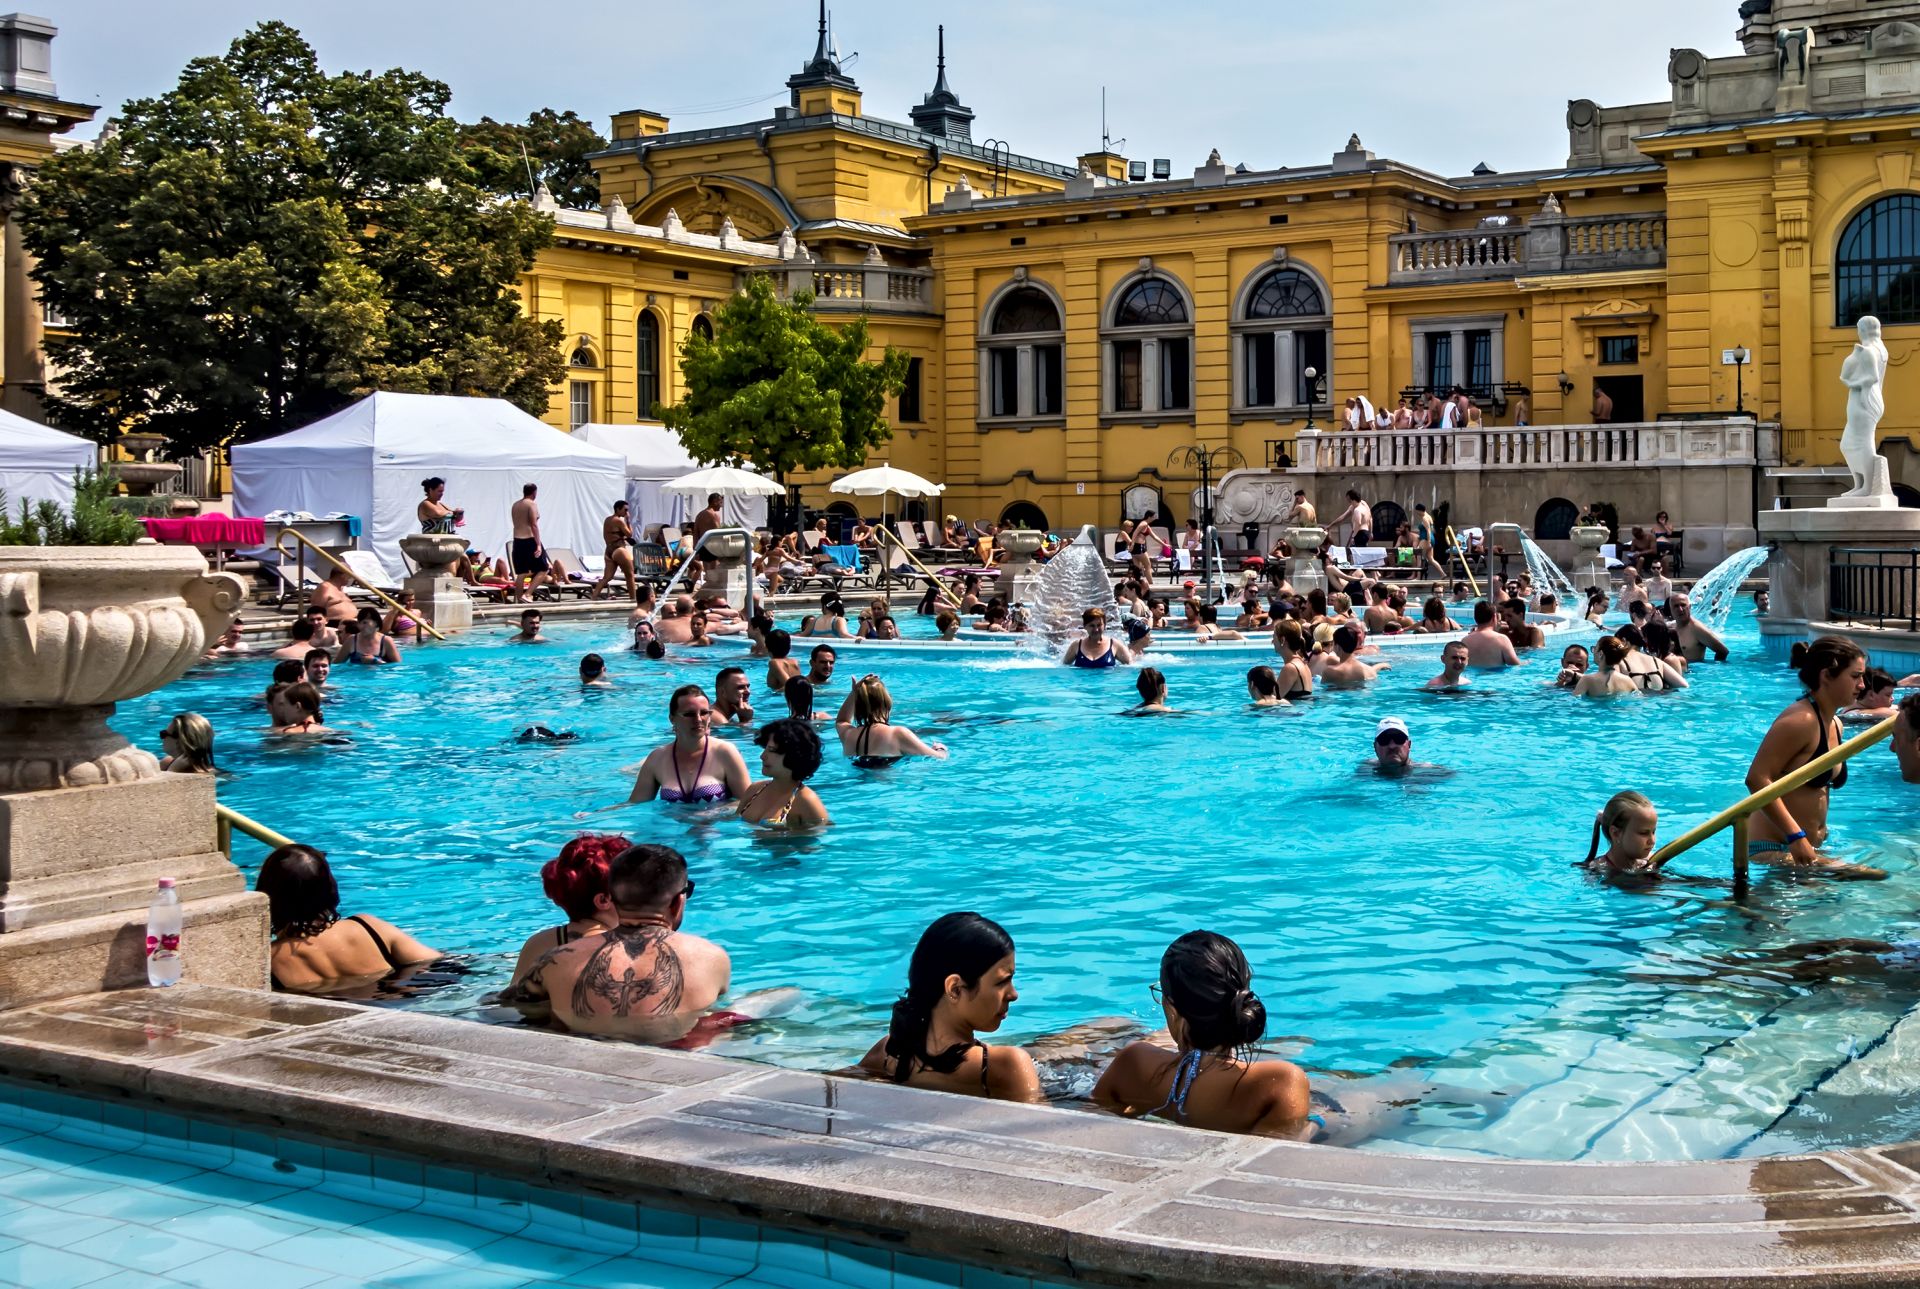 Szechenyi Spa Baths, Budapest. August 24, 2019